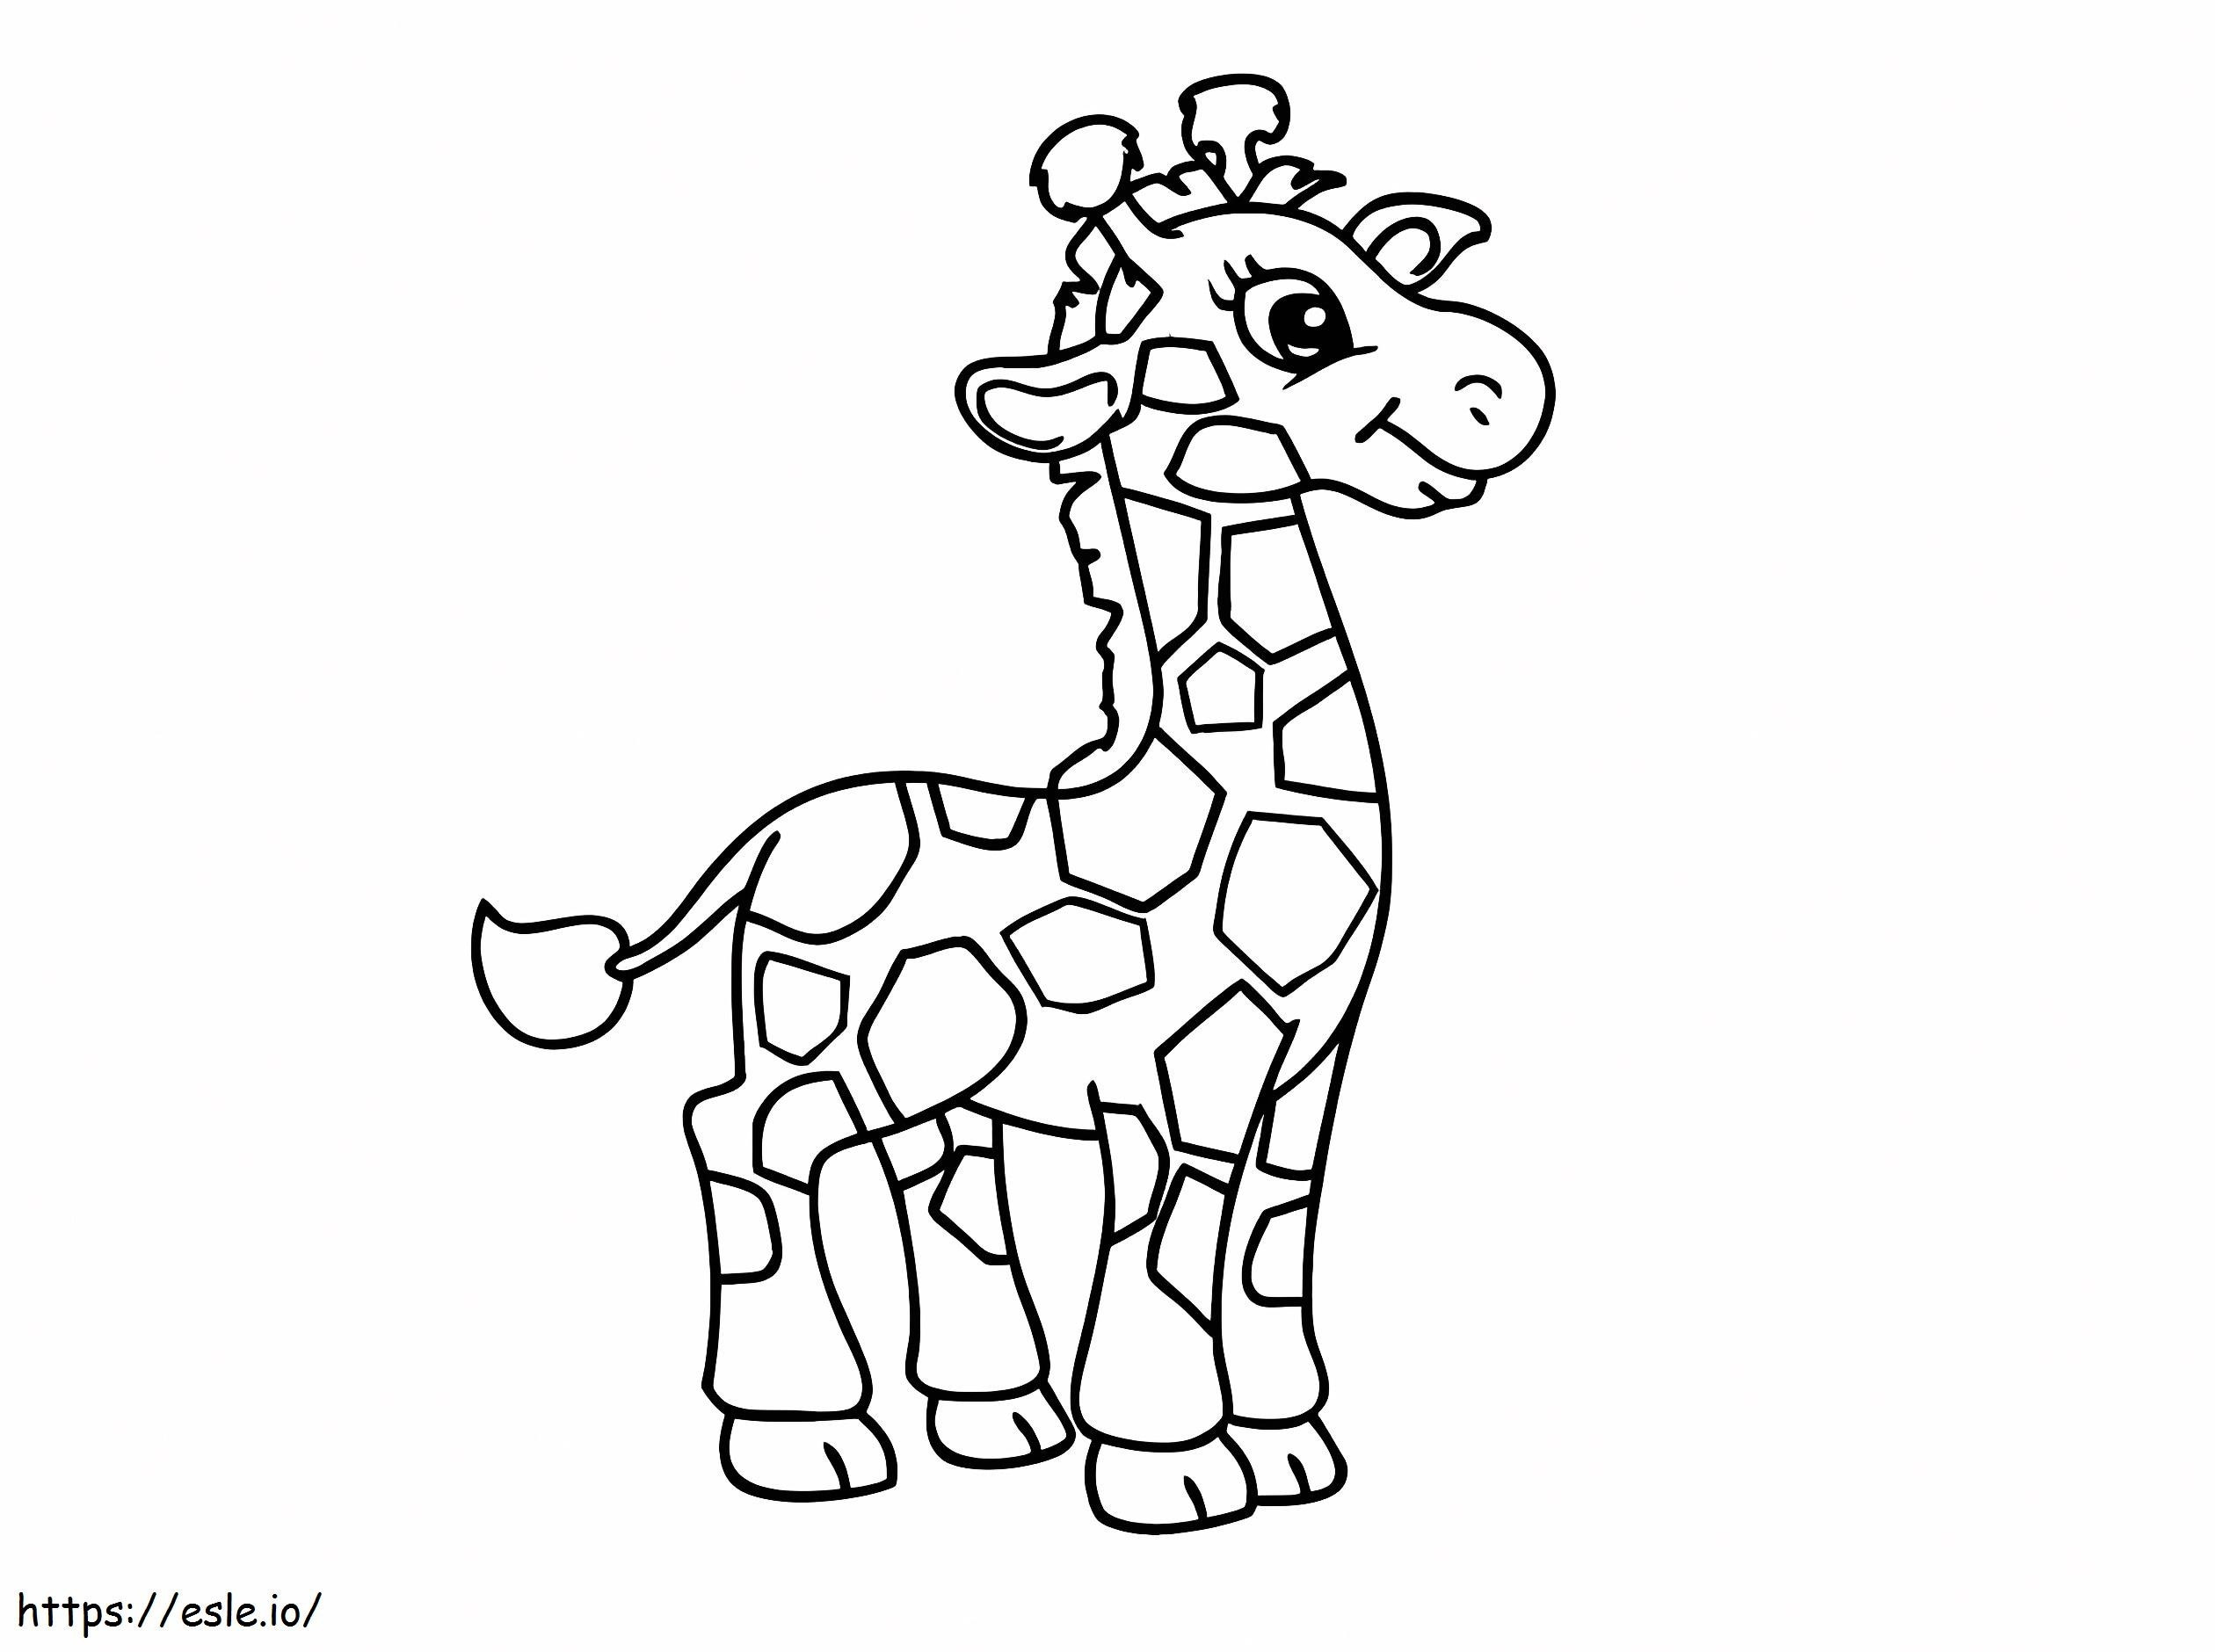 1529032853 Small Giraffe1 coloring page